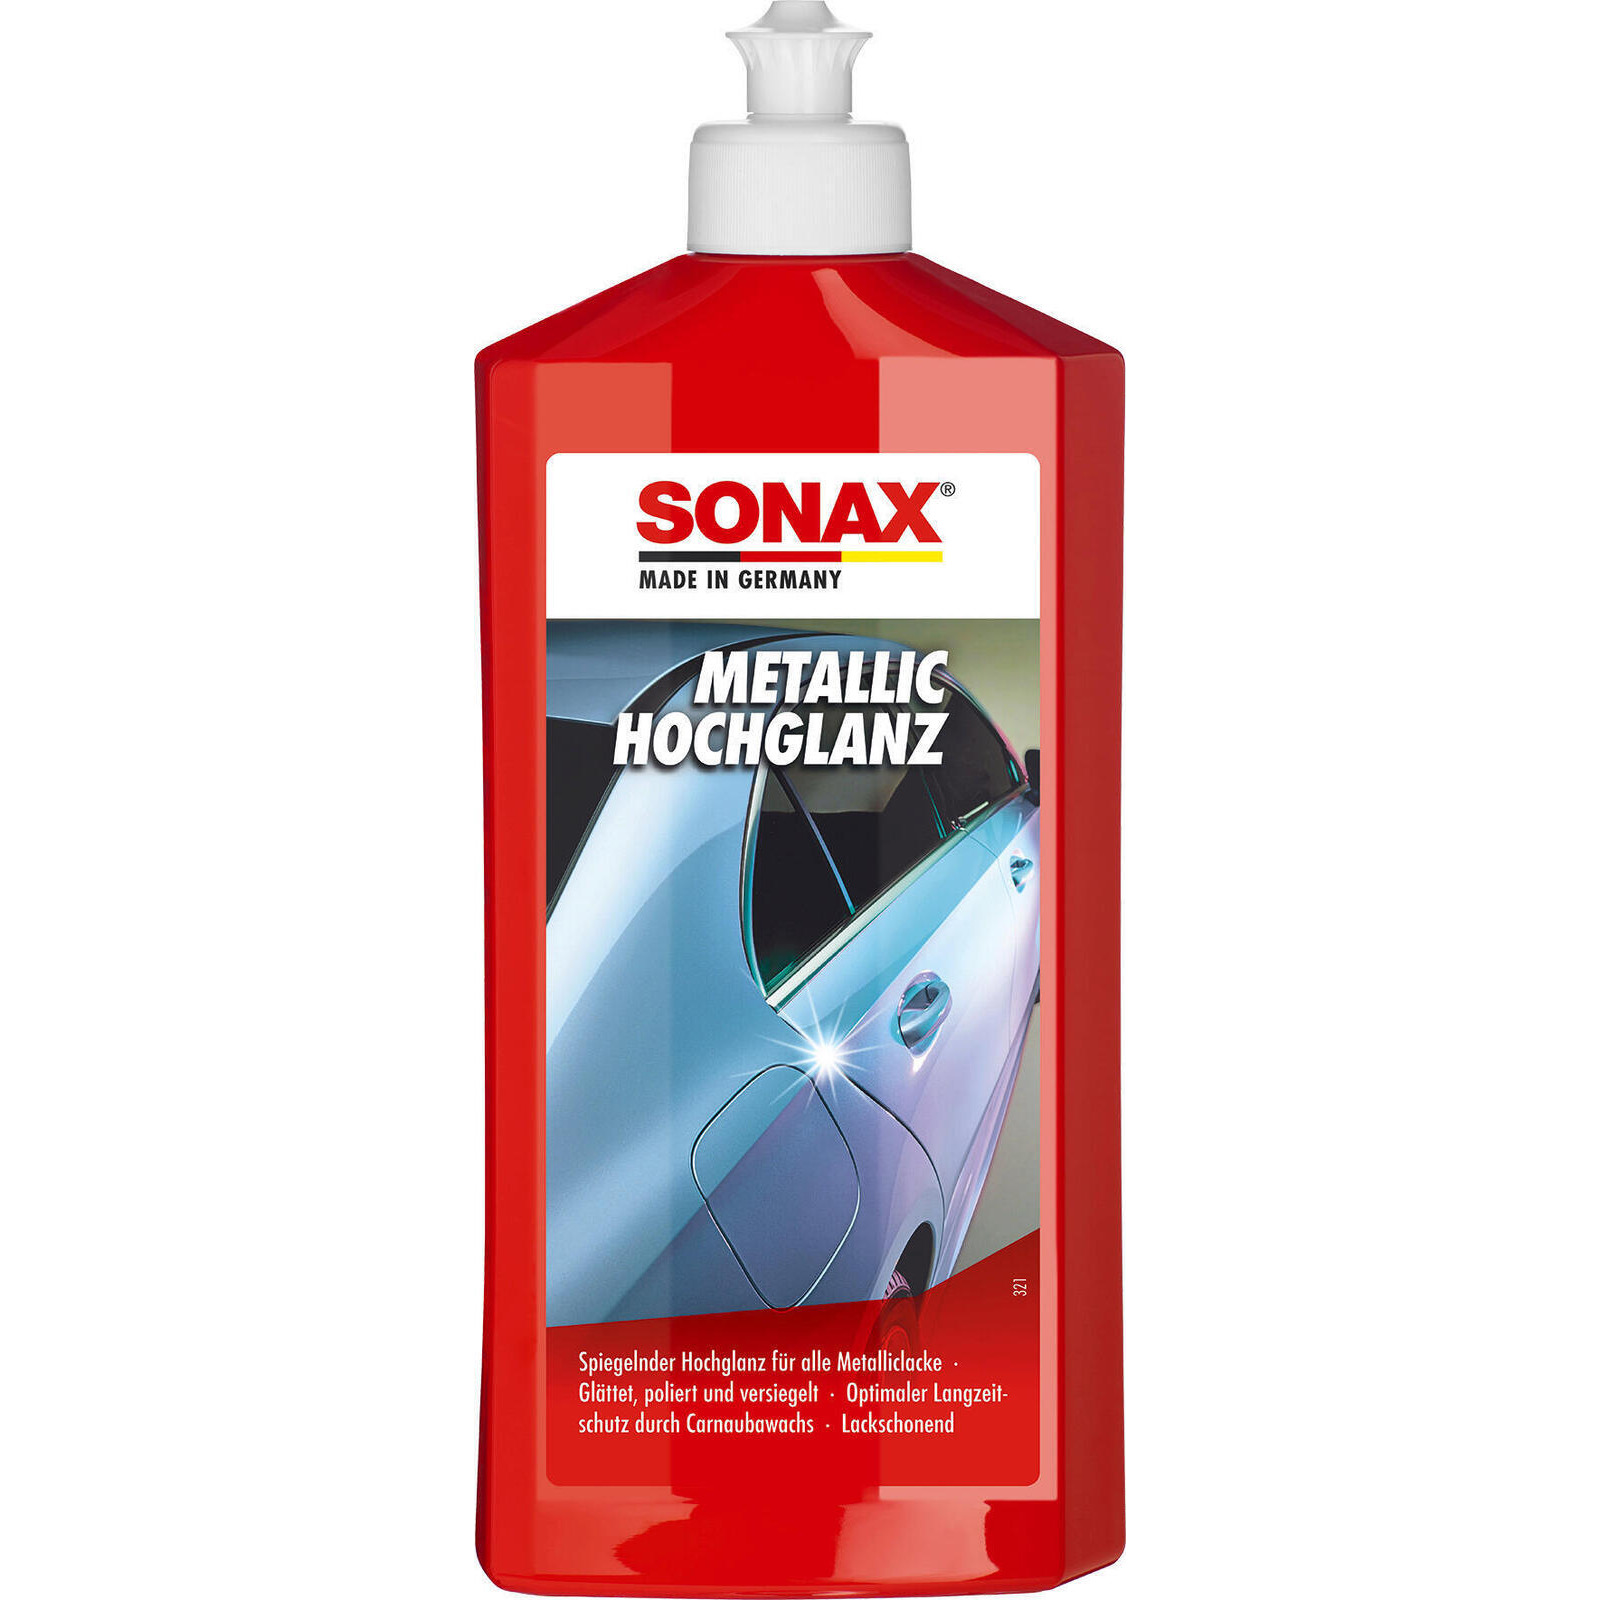 SONAX Polish Metallic high gloss